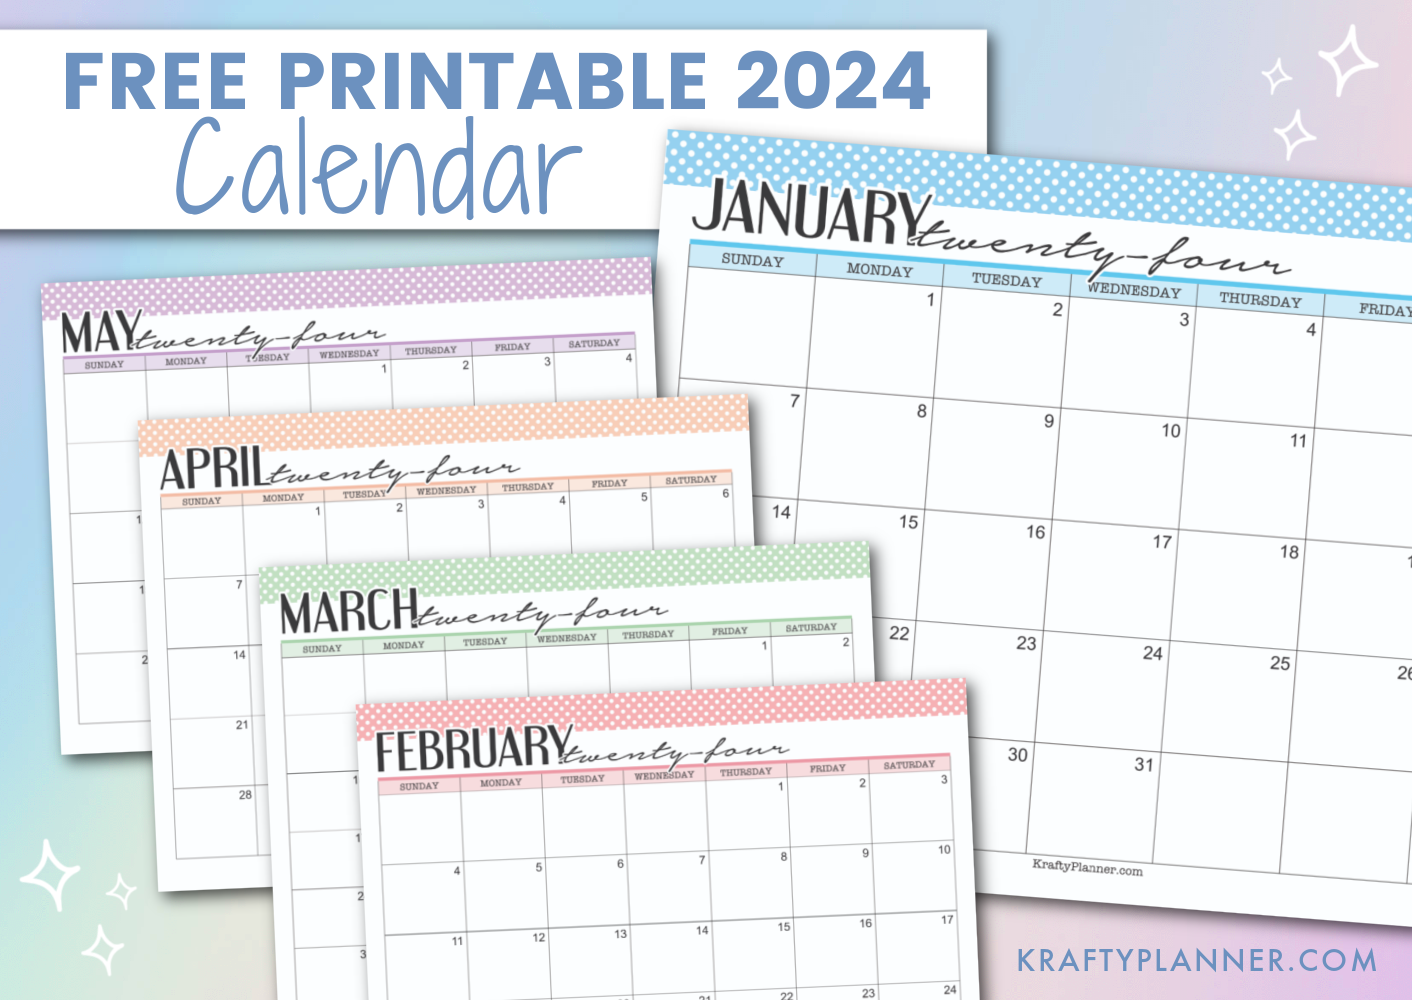 Free Printable 2024 Calendars (Color) — Krafty Planner for Free Printable Coloring Calendar 2024